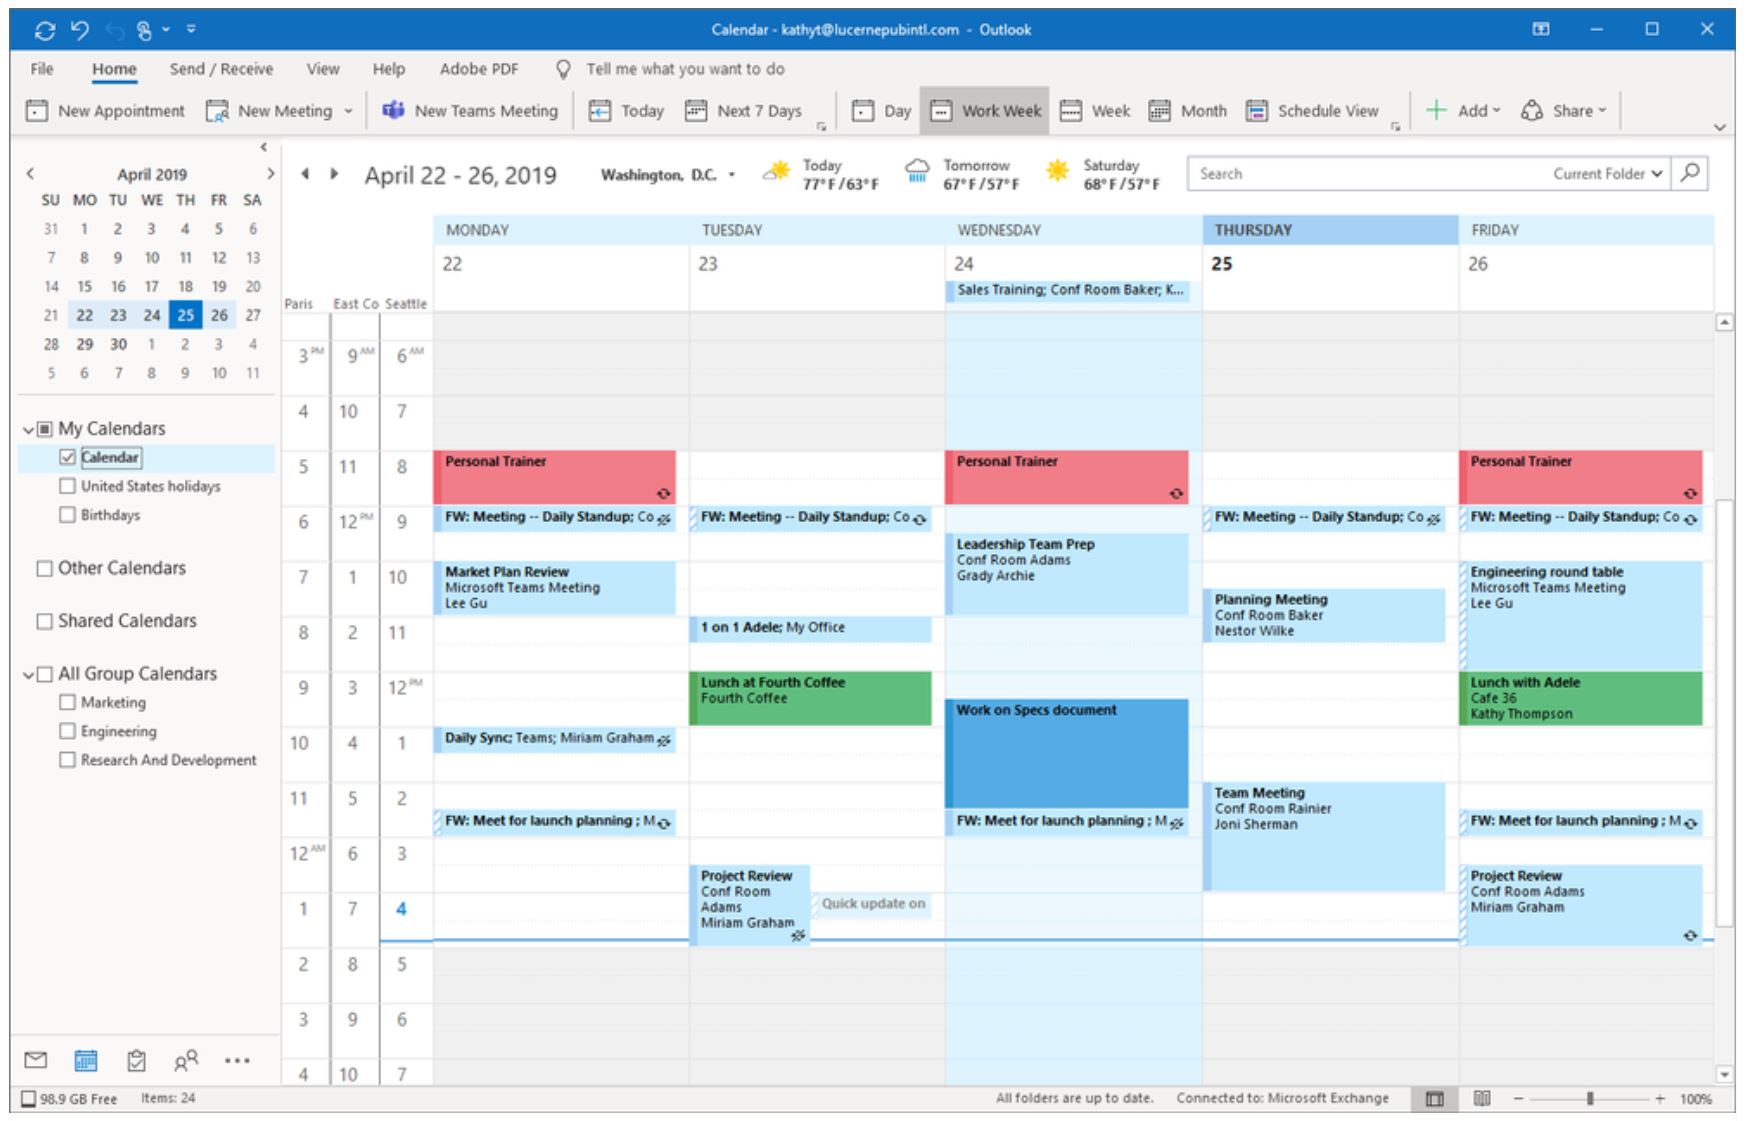 Outlook calendar image